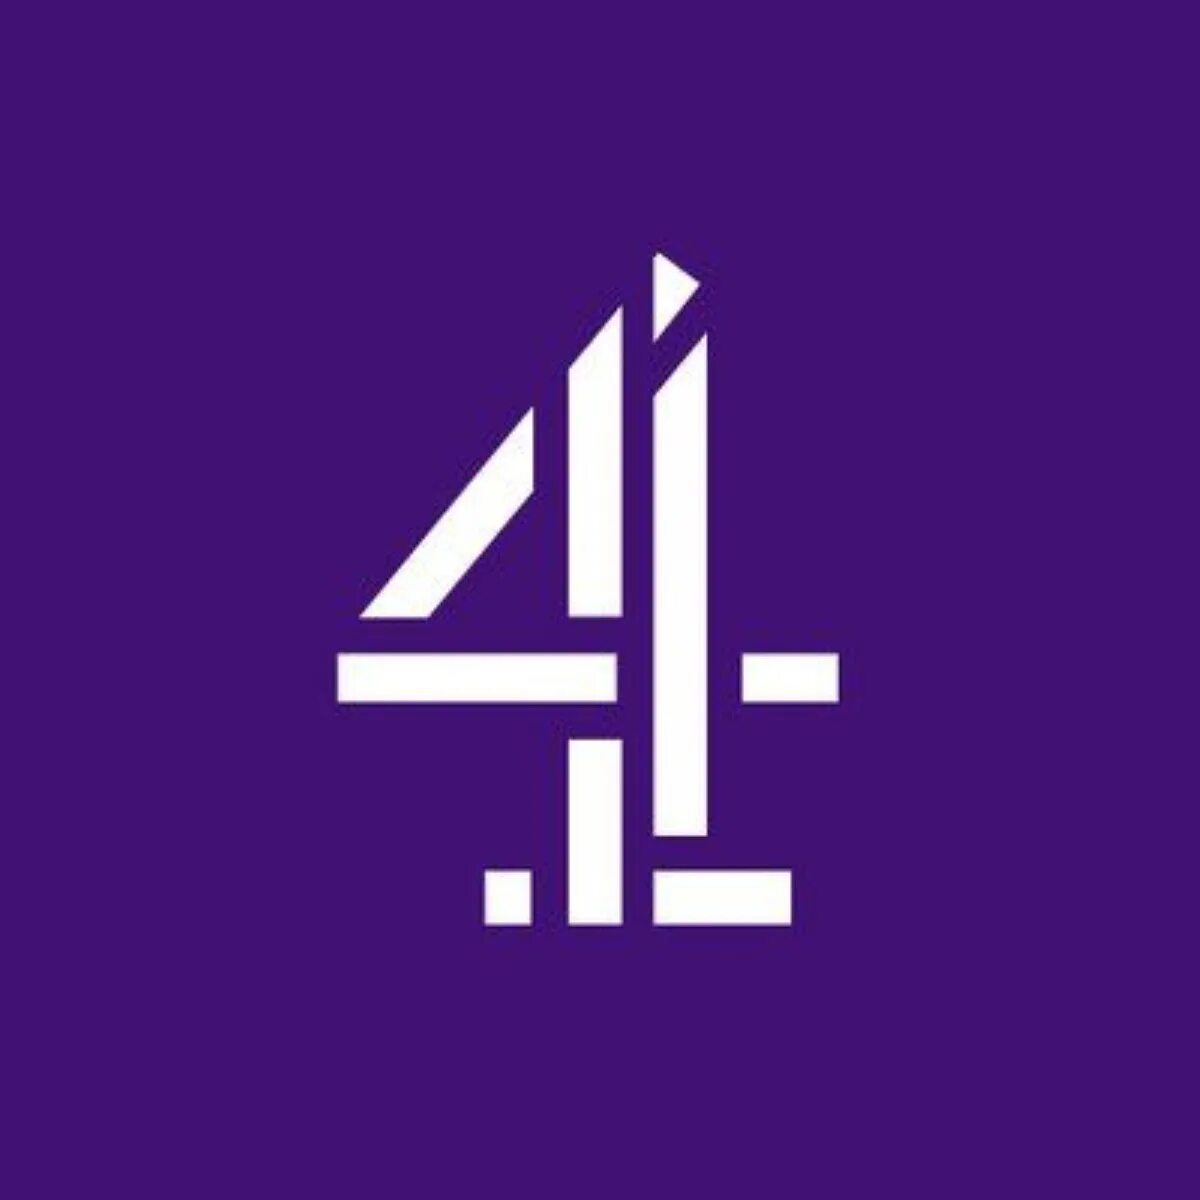 Channel britain. Channel 4. Channel 4 Britain. Channel 4 News. Channel 4 программы.